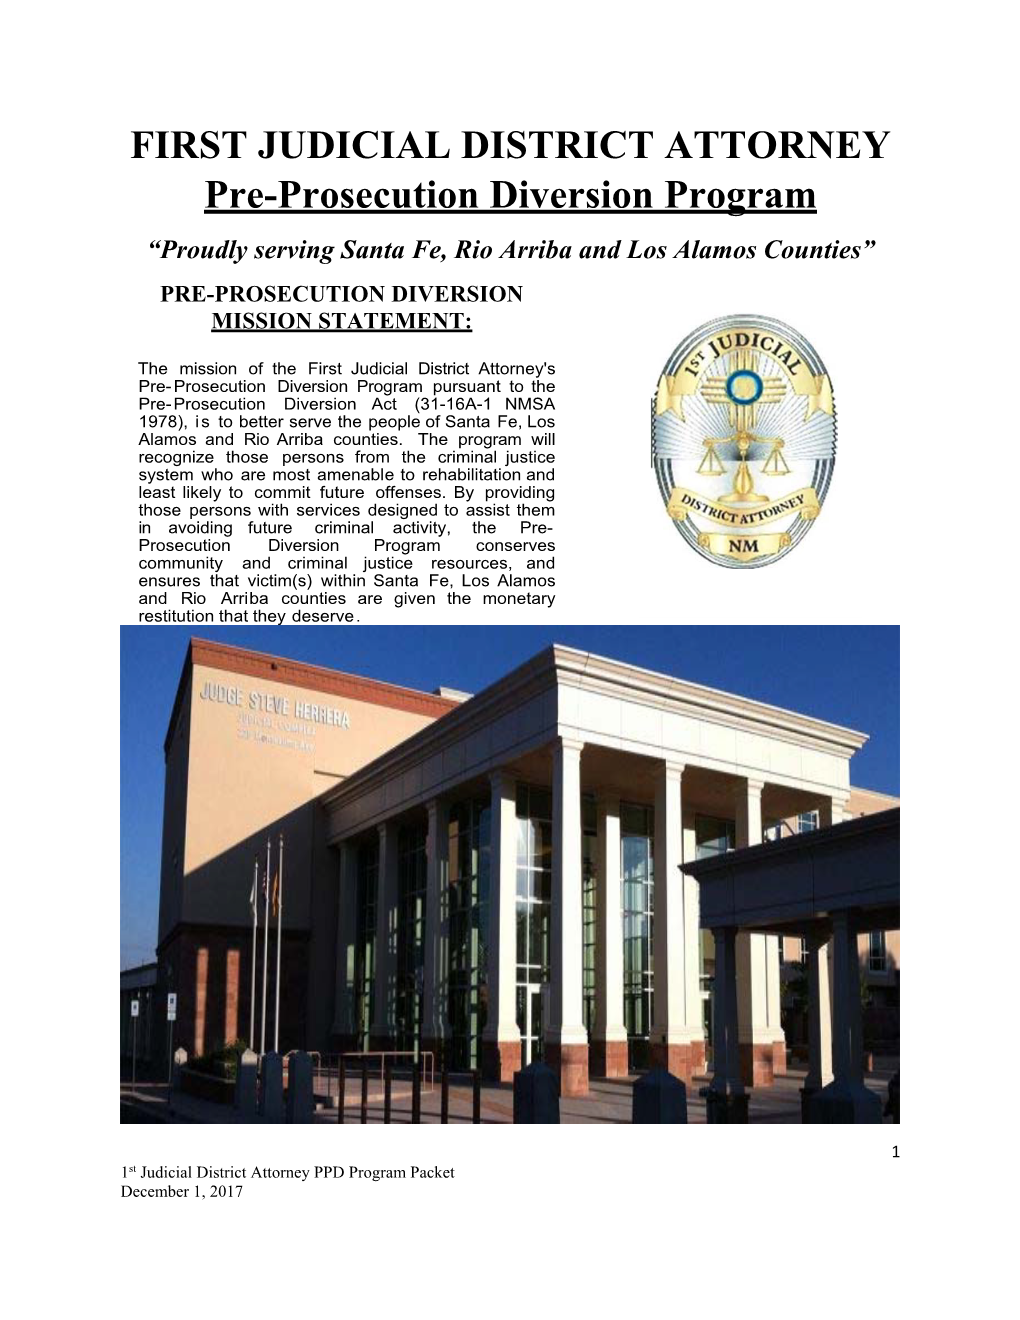 FIRST JUDICIAL DISTRICT ATTORNEY Pre-Prosecution Diversion Program